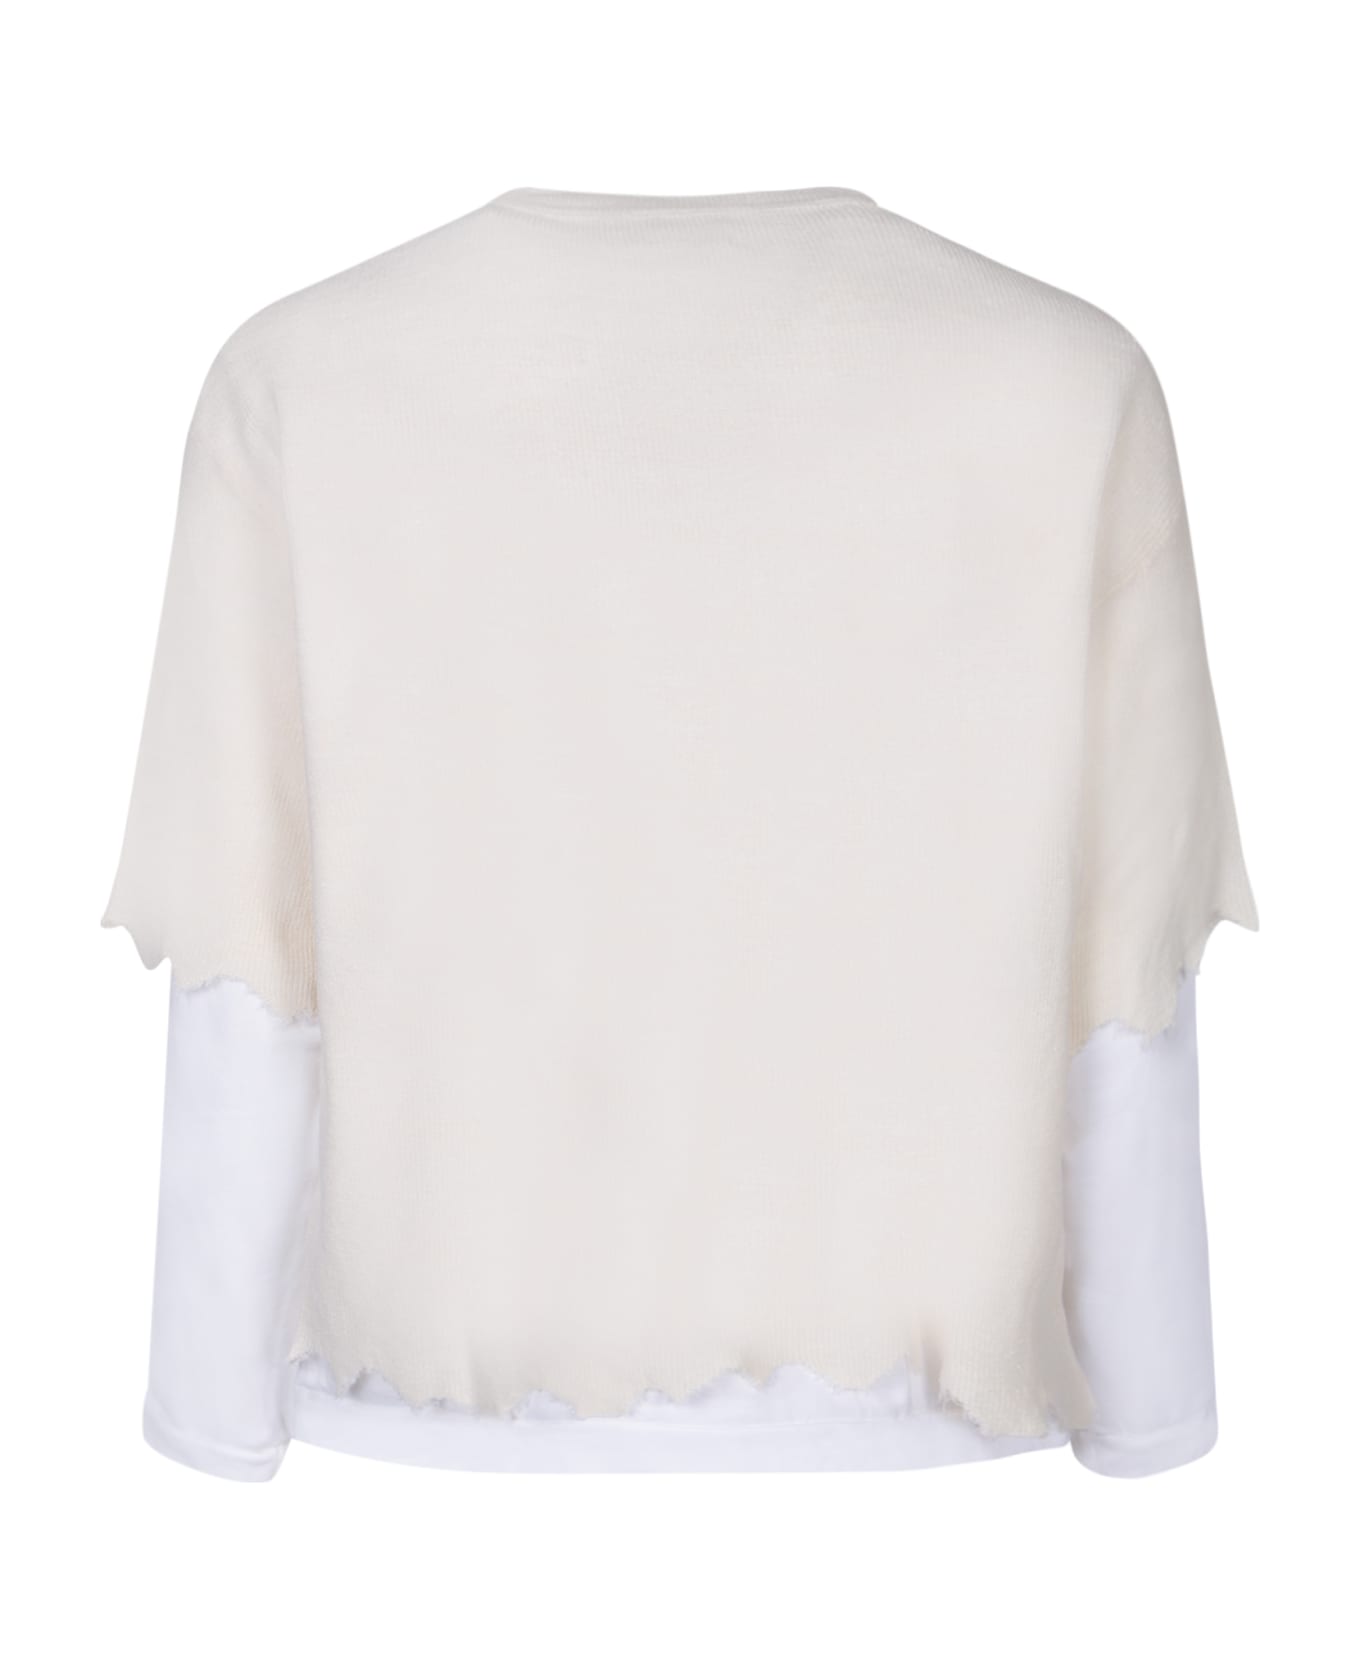 Atomo Factory Cream Sweater With Slits - White